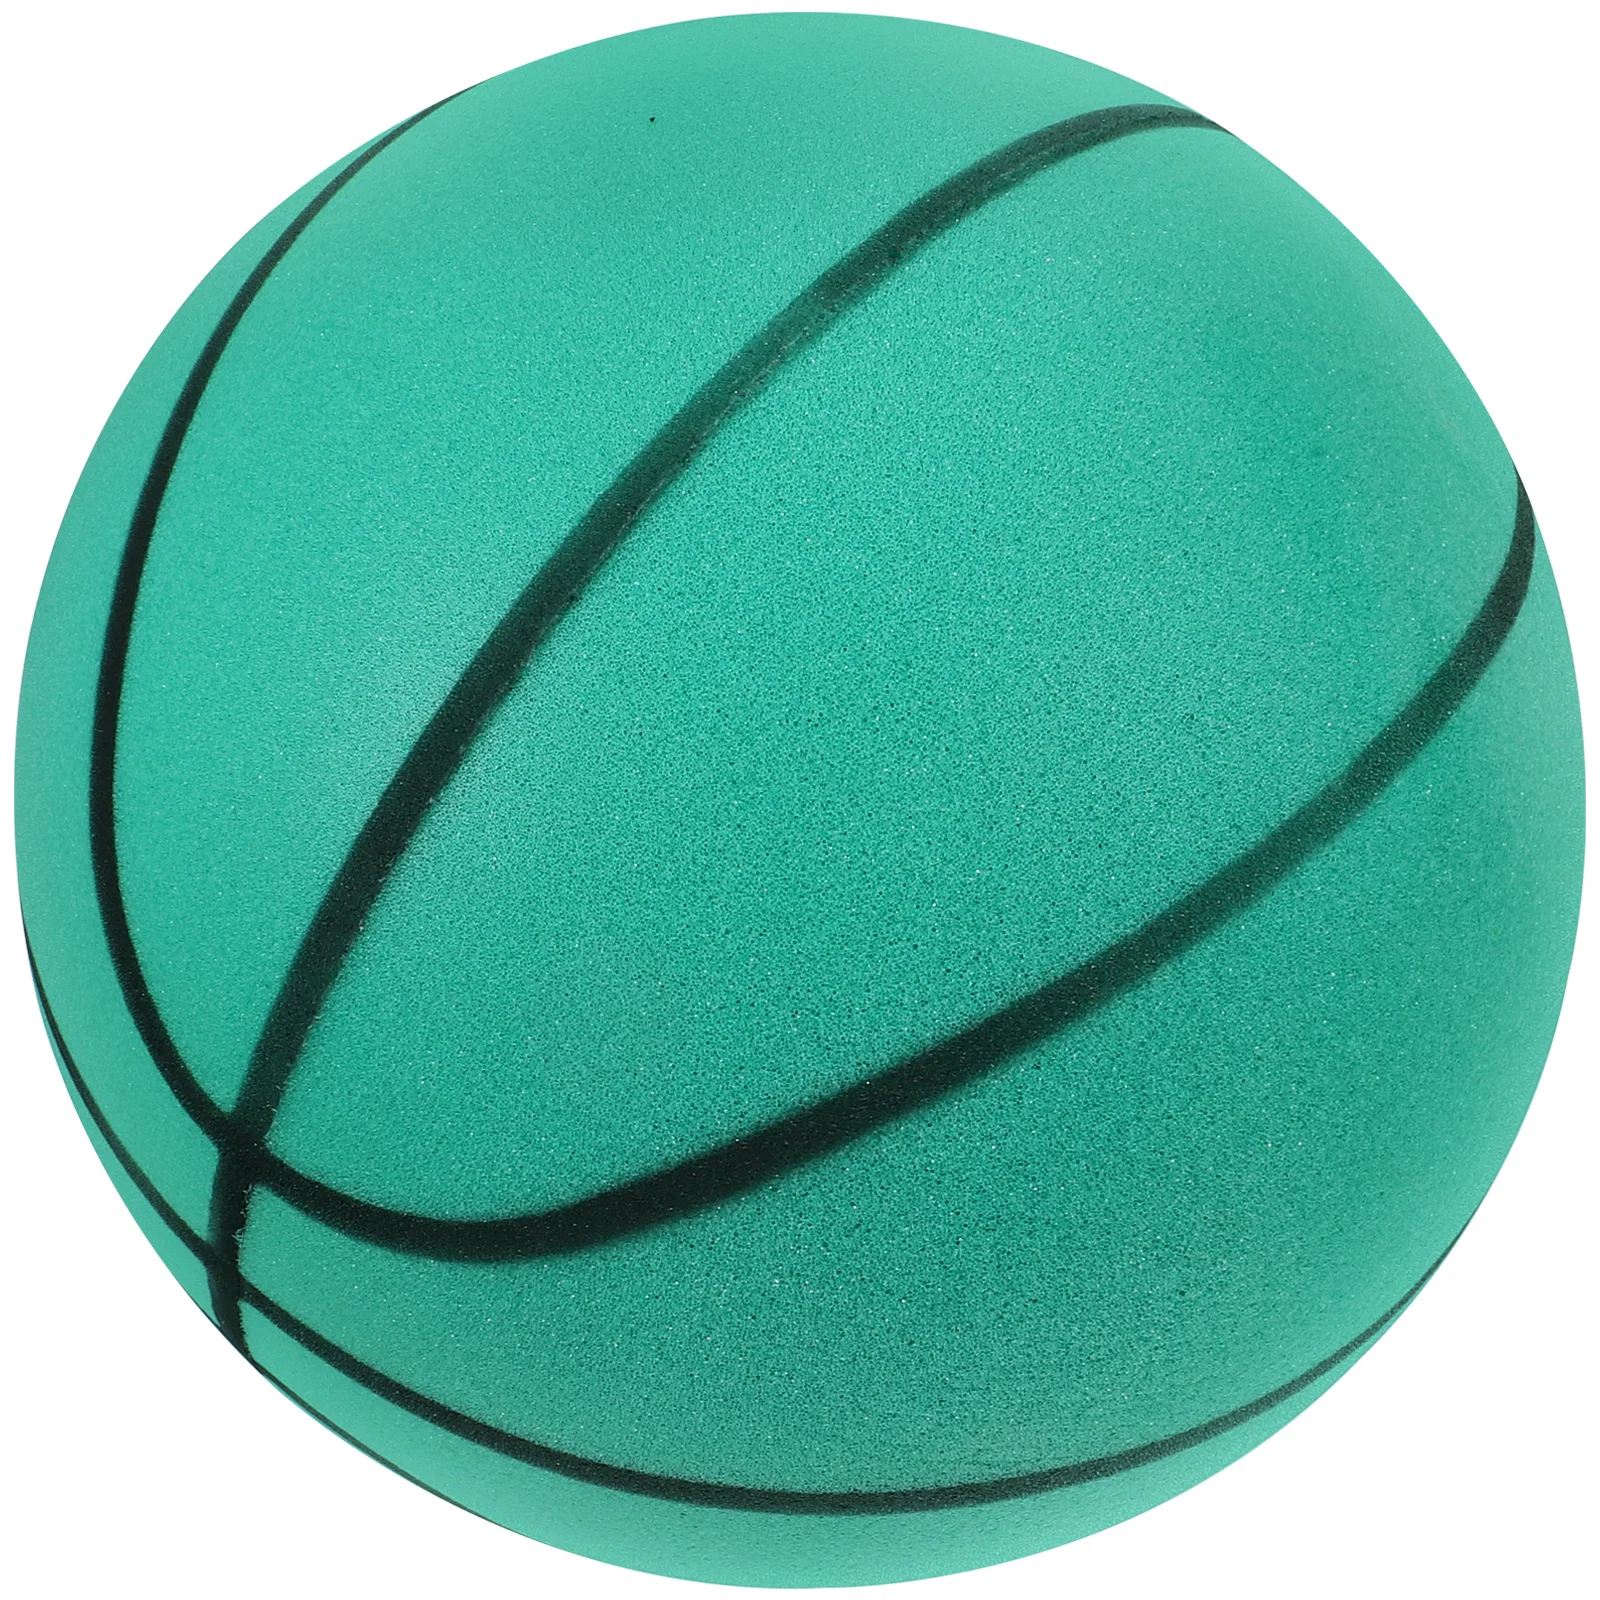 

Indoors Training Silent Basketball Bouncy Basketball Toy Portable Mute Bouncing Basketball